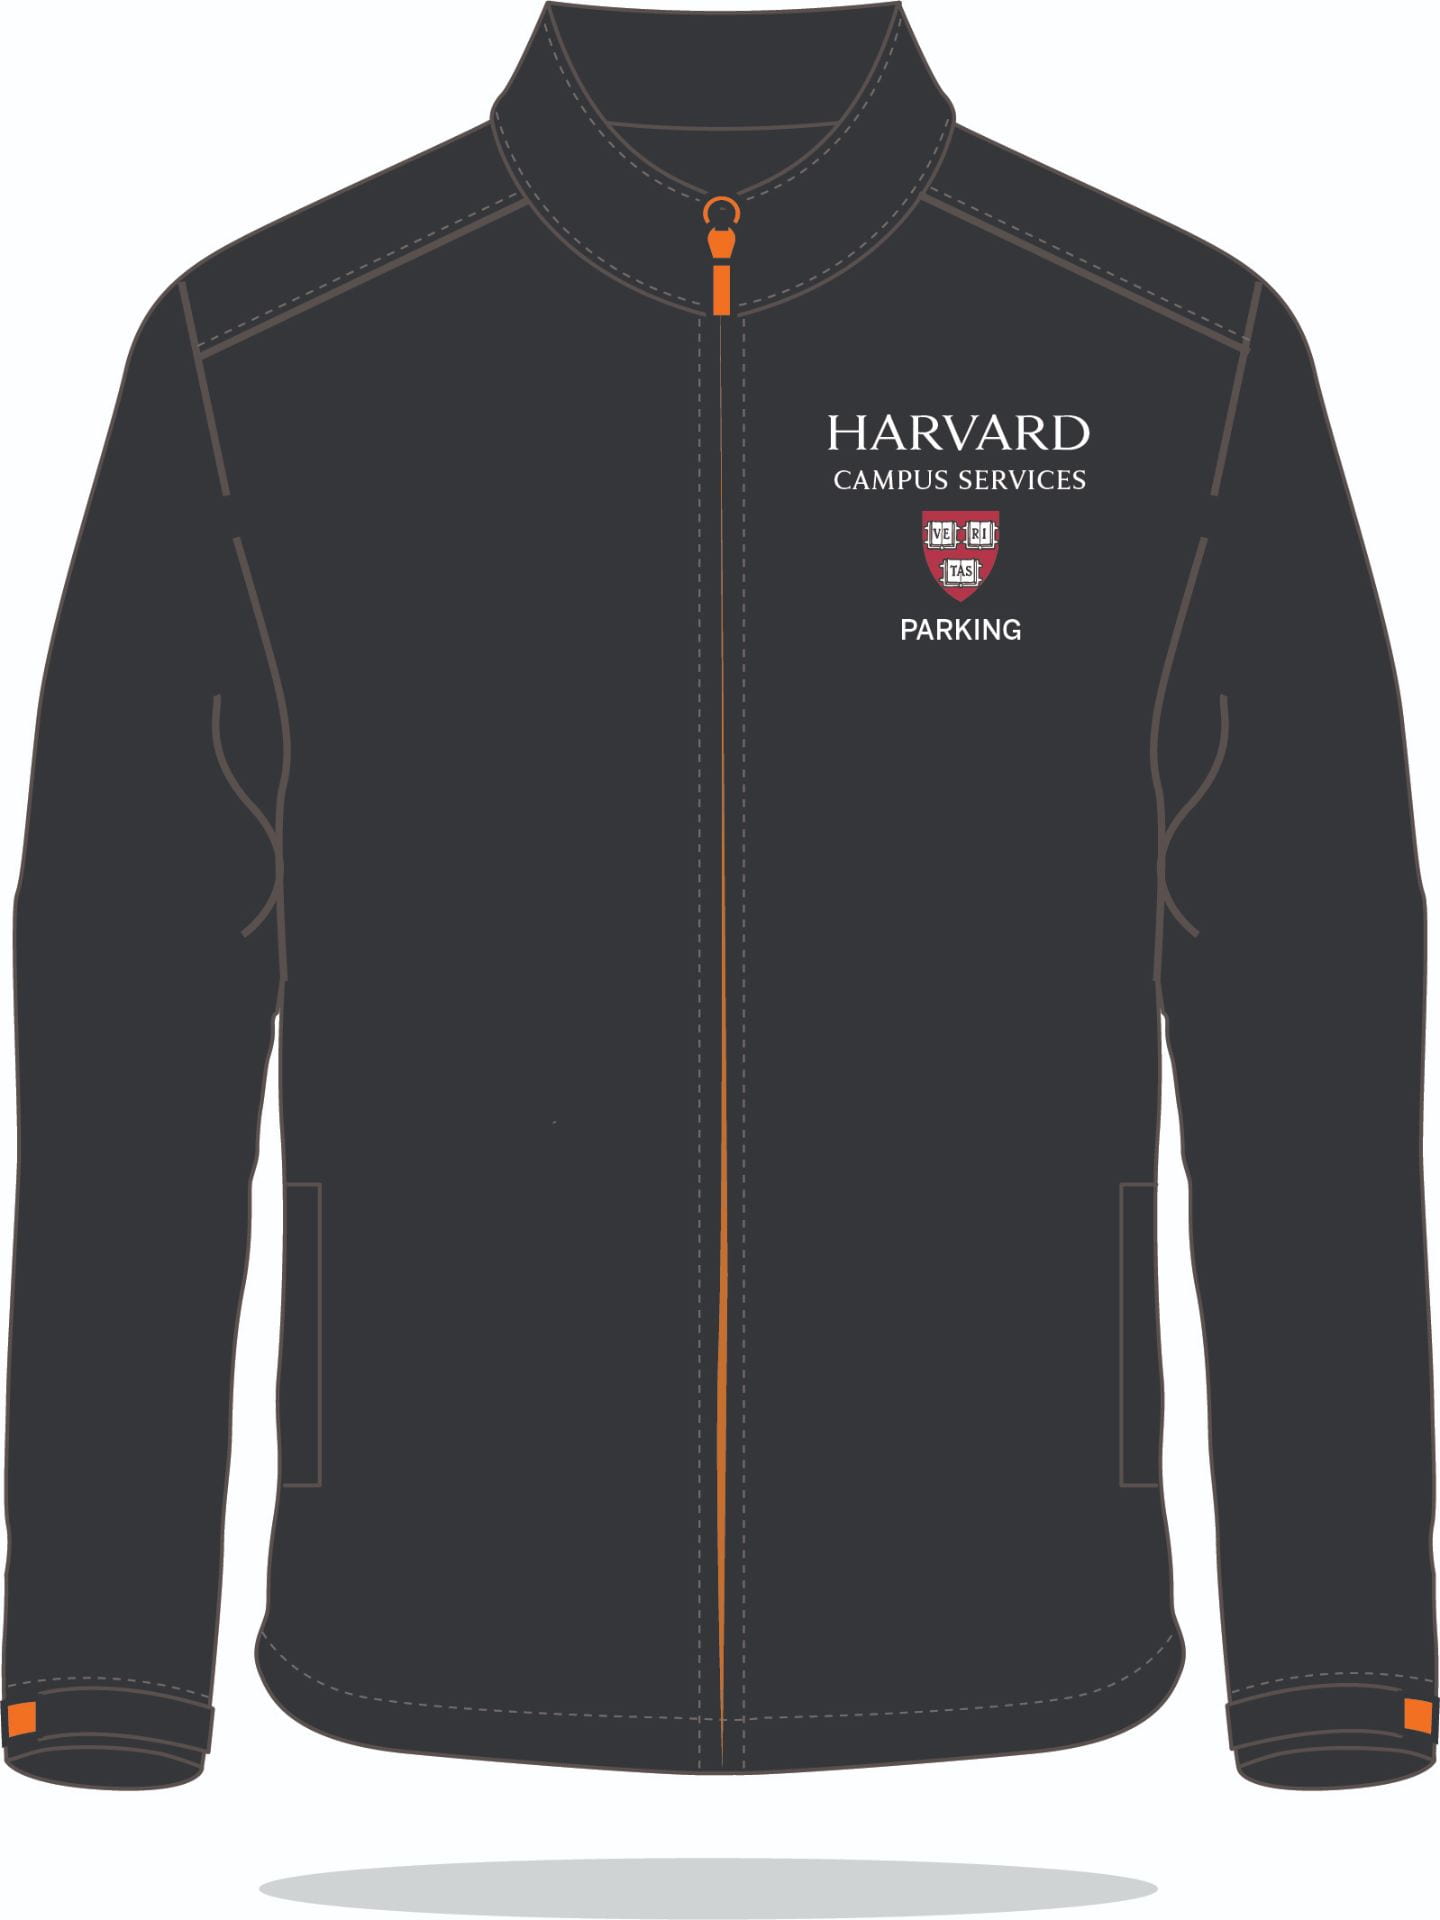 Illustration of an employee jacket with Harvard branding